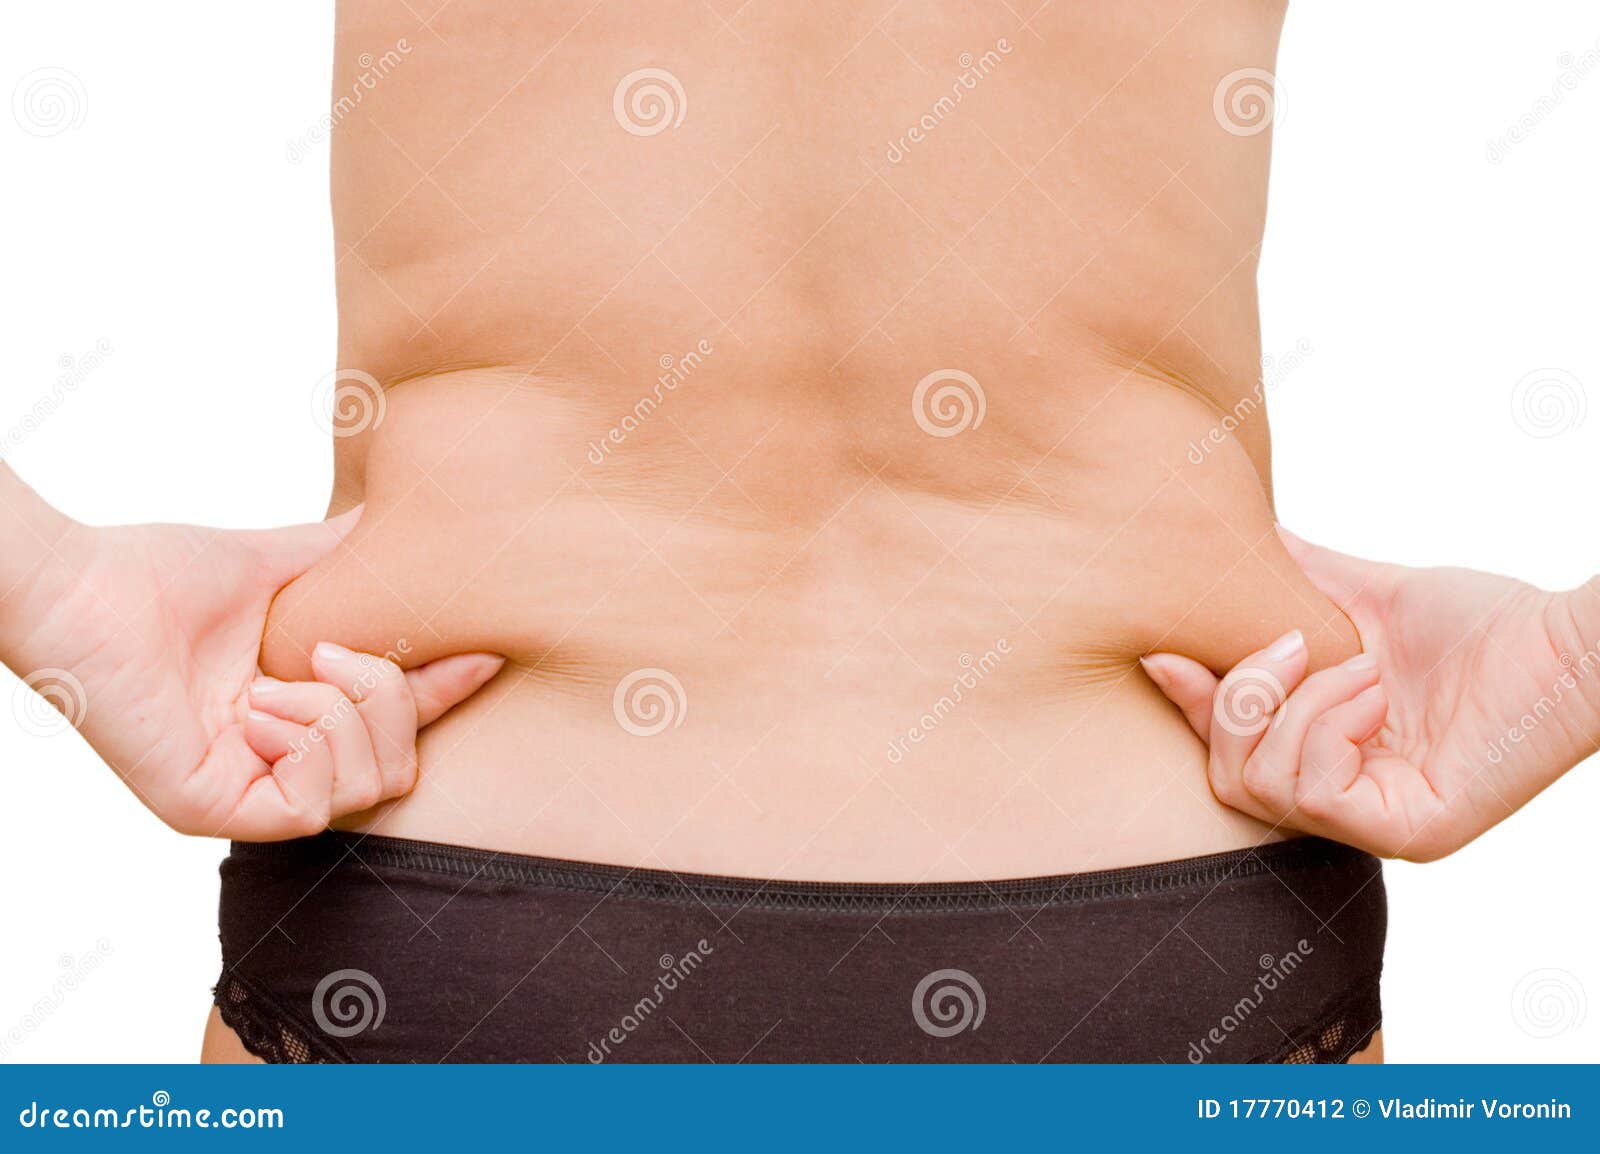 cellulitis stomach #9